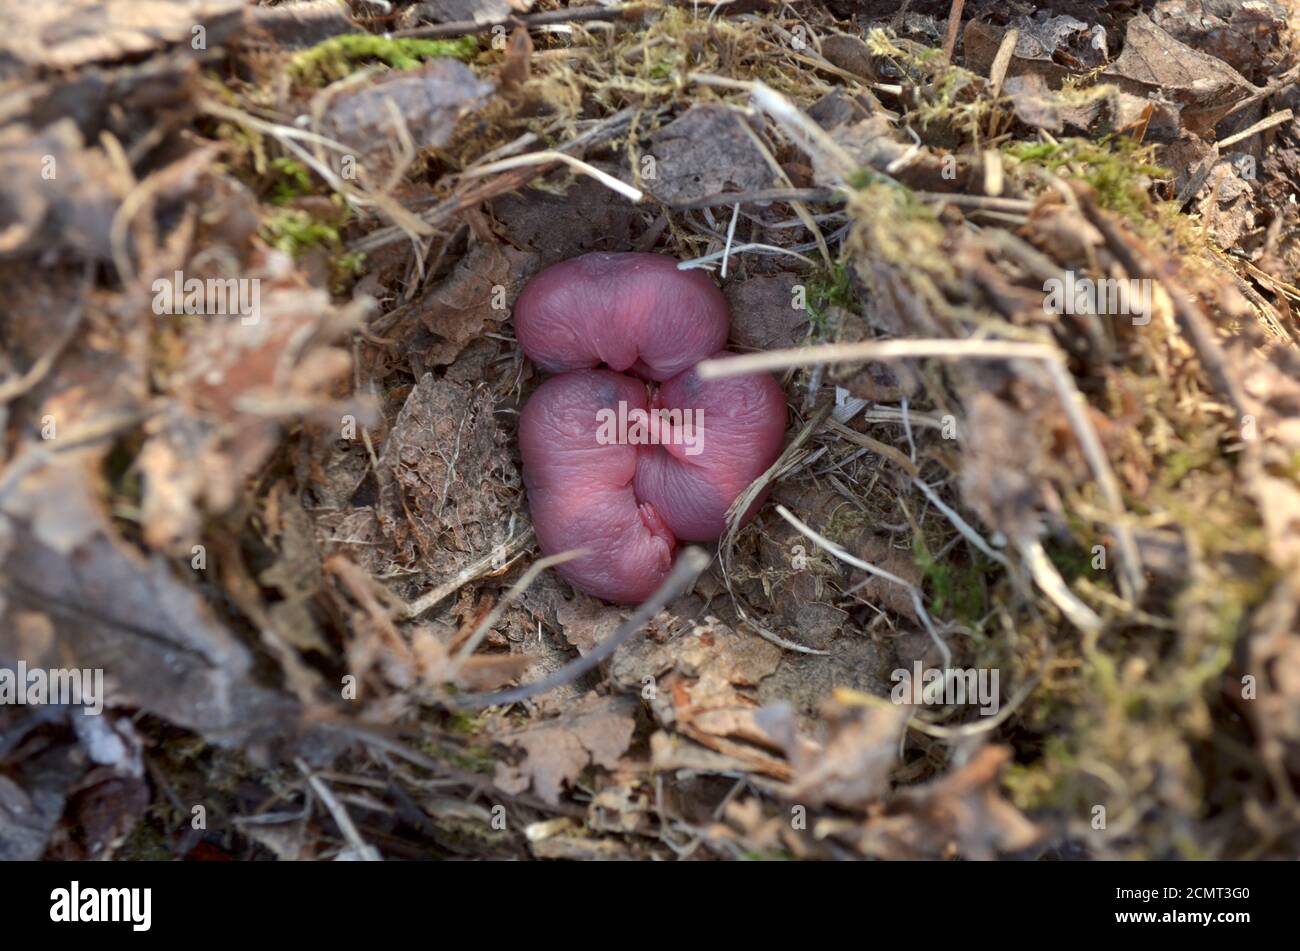 Three newborn baby rats in nest in its natural habitat. Fauna of Ukraine. Shallow depth of field, closeup. Stock Photo